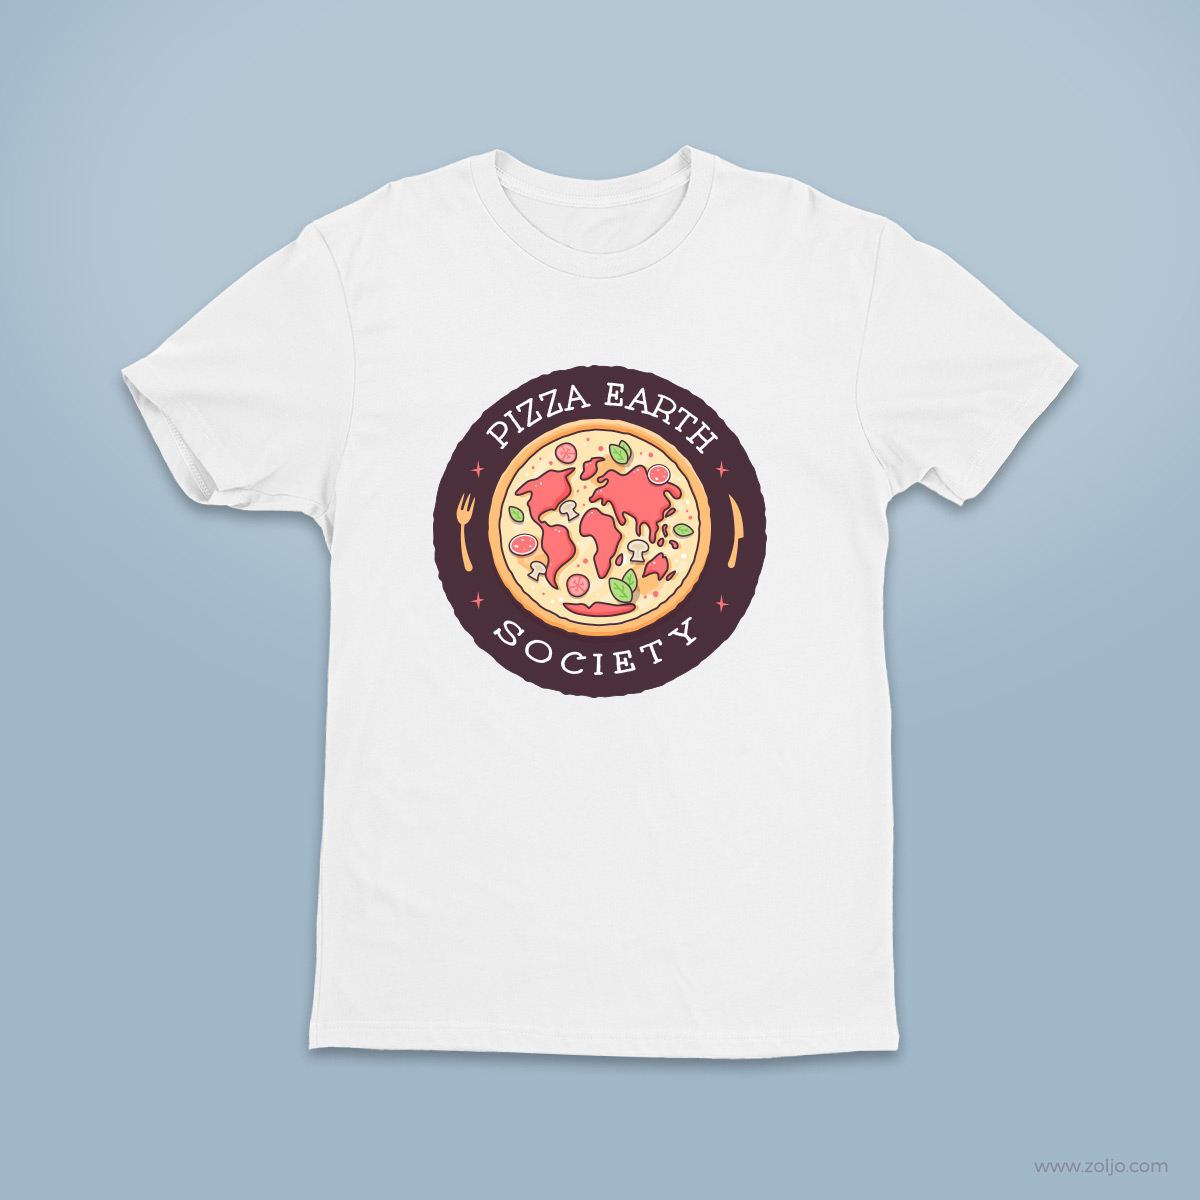 Pizza Earth Society T-shirt, stickers,mugs,merchandise